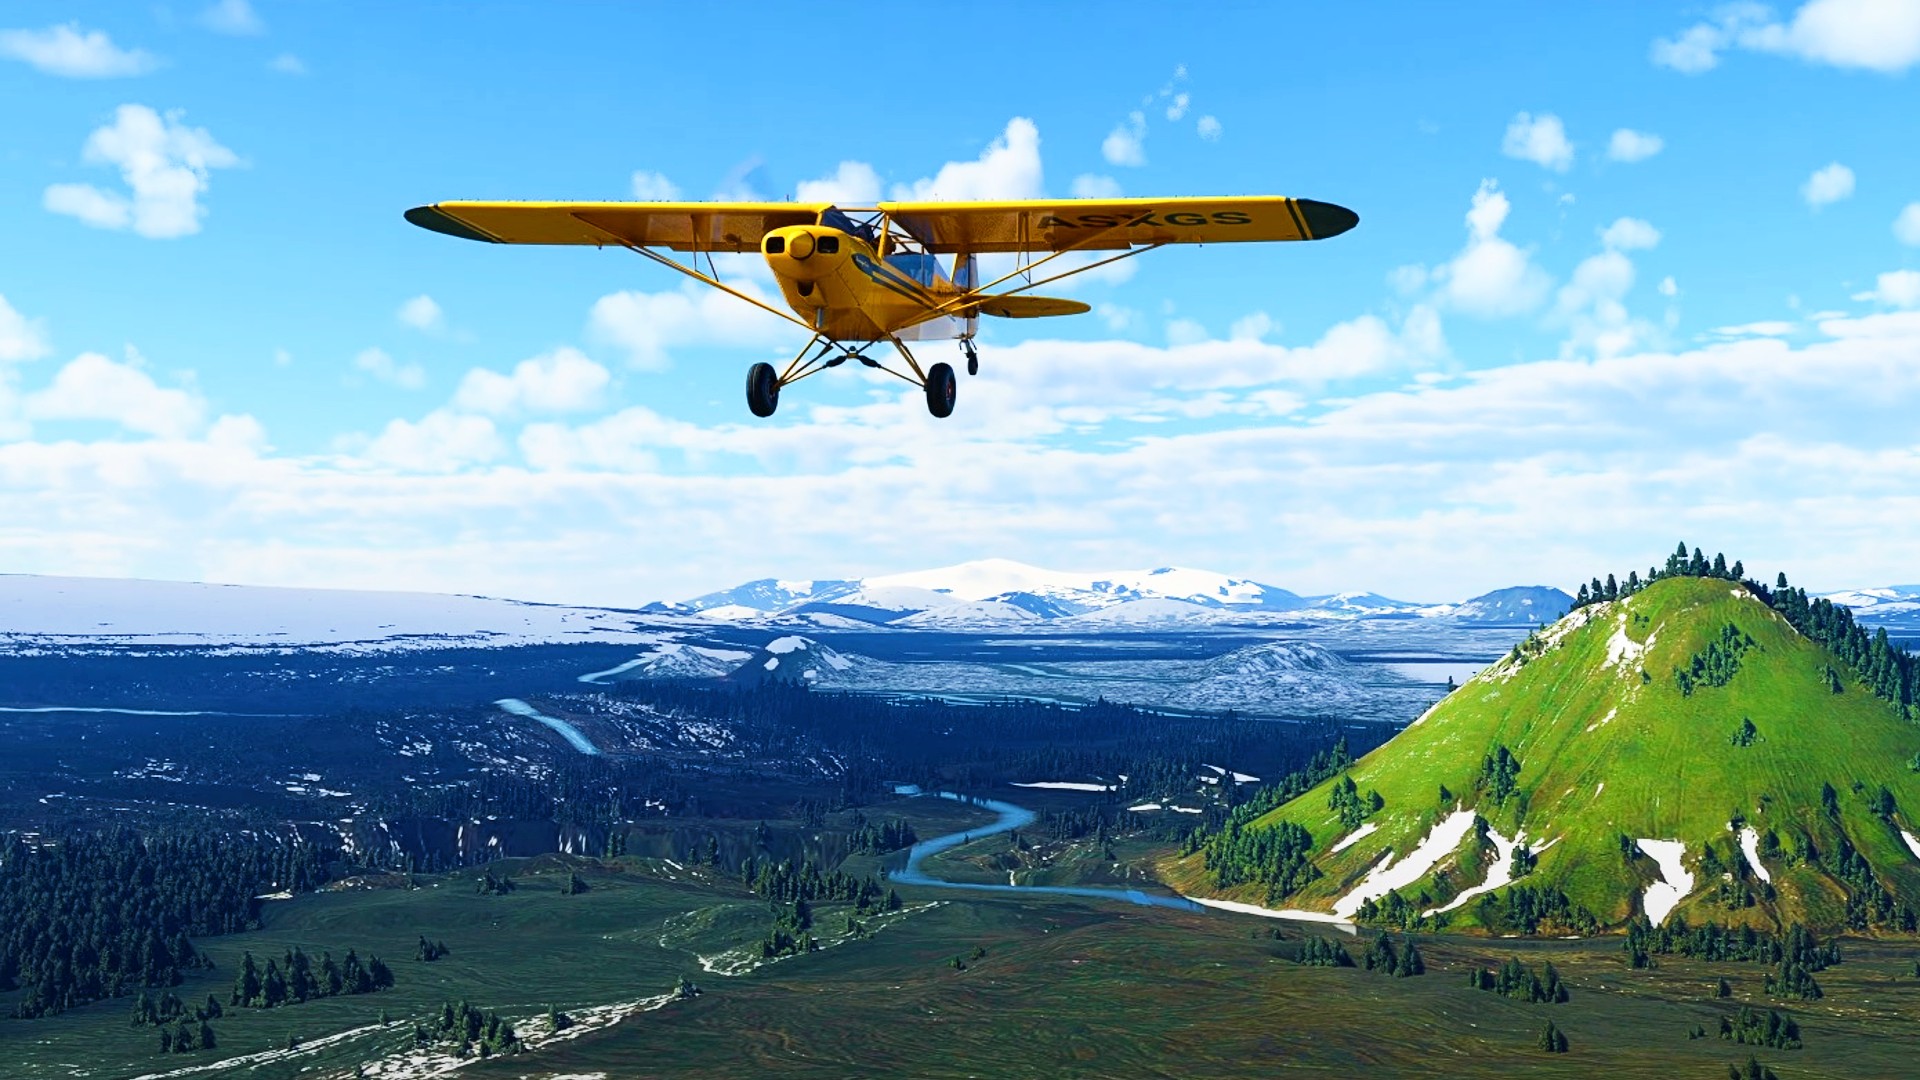 Microsoft Flight Simulator’s Nordics world update looks stunning